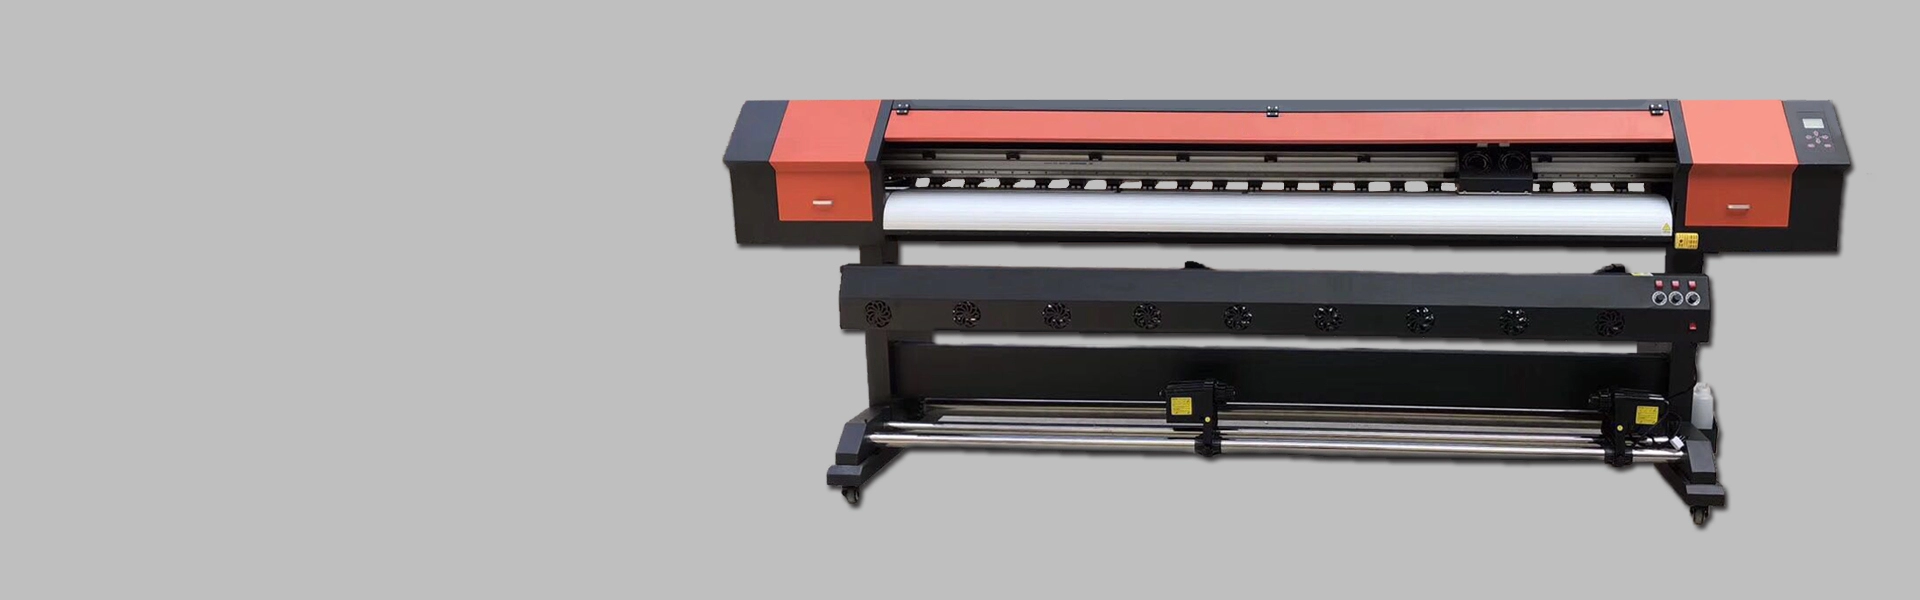 Impressora XP600 de 2,5 m